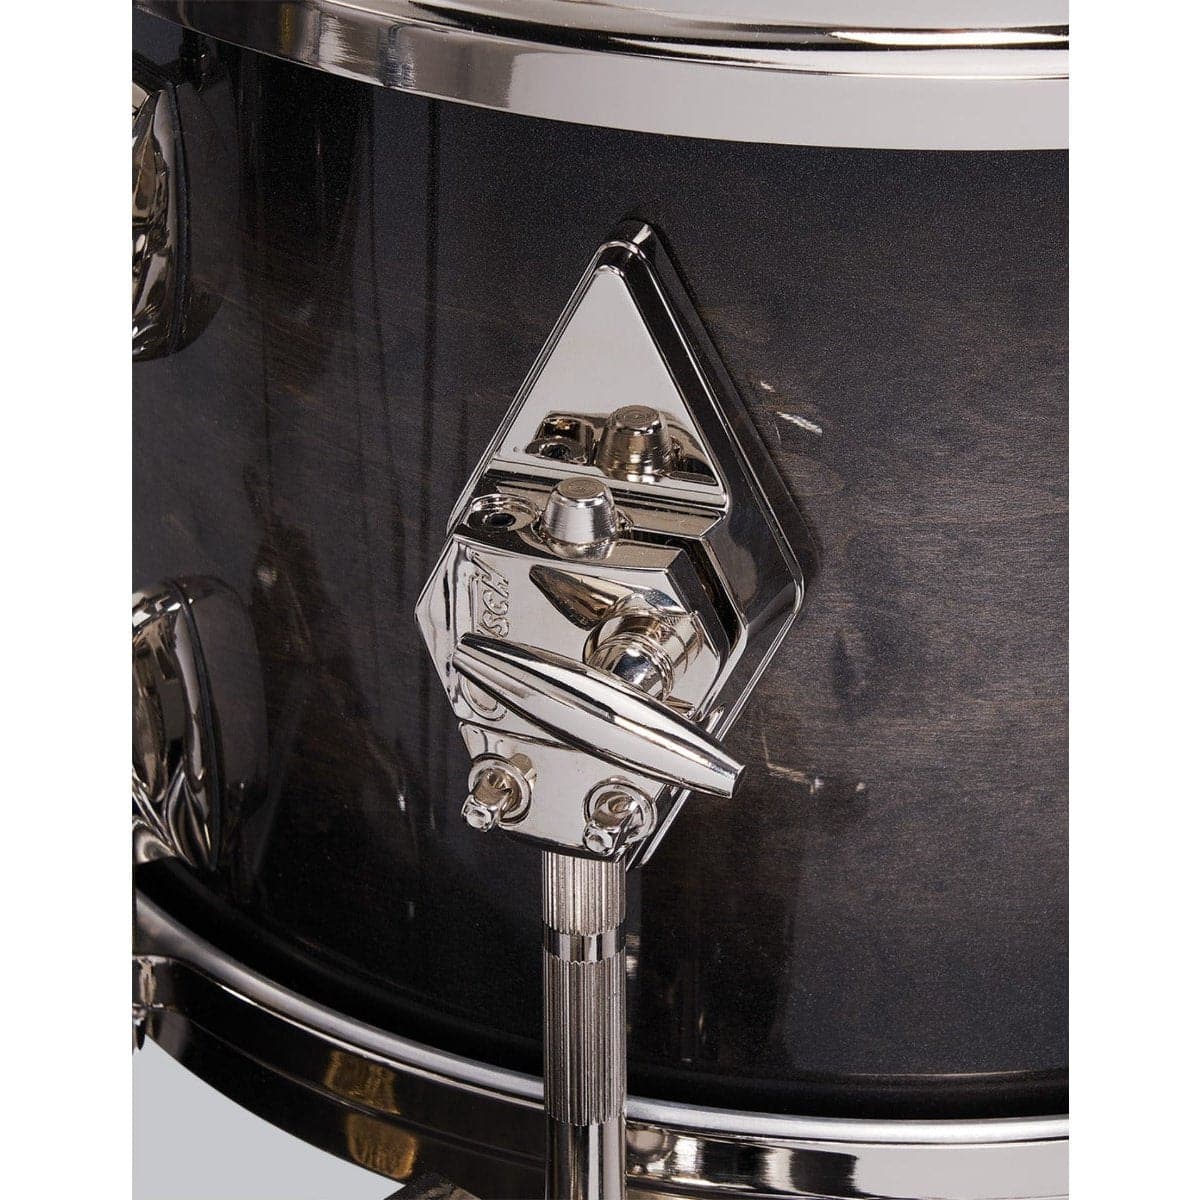 Gretsch Limited Edition 140th Anniversary 4pc Drum Set Ebony Stardust